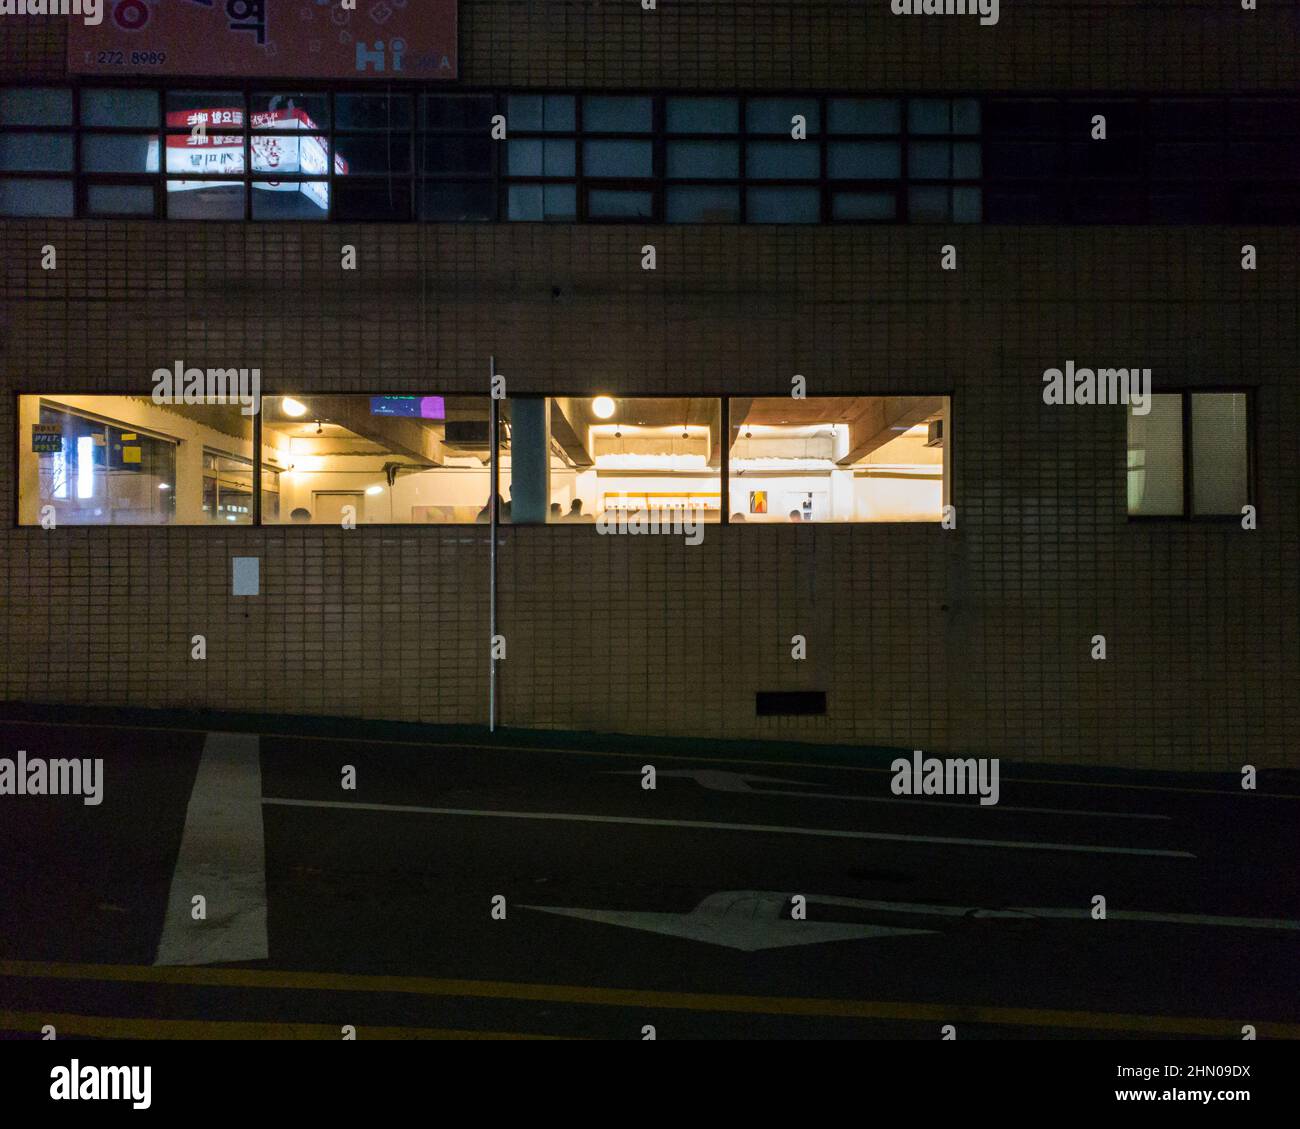 Ulsan, South Korea - Facade of an instagrammable cafe at night. Stock Photo